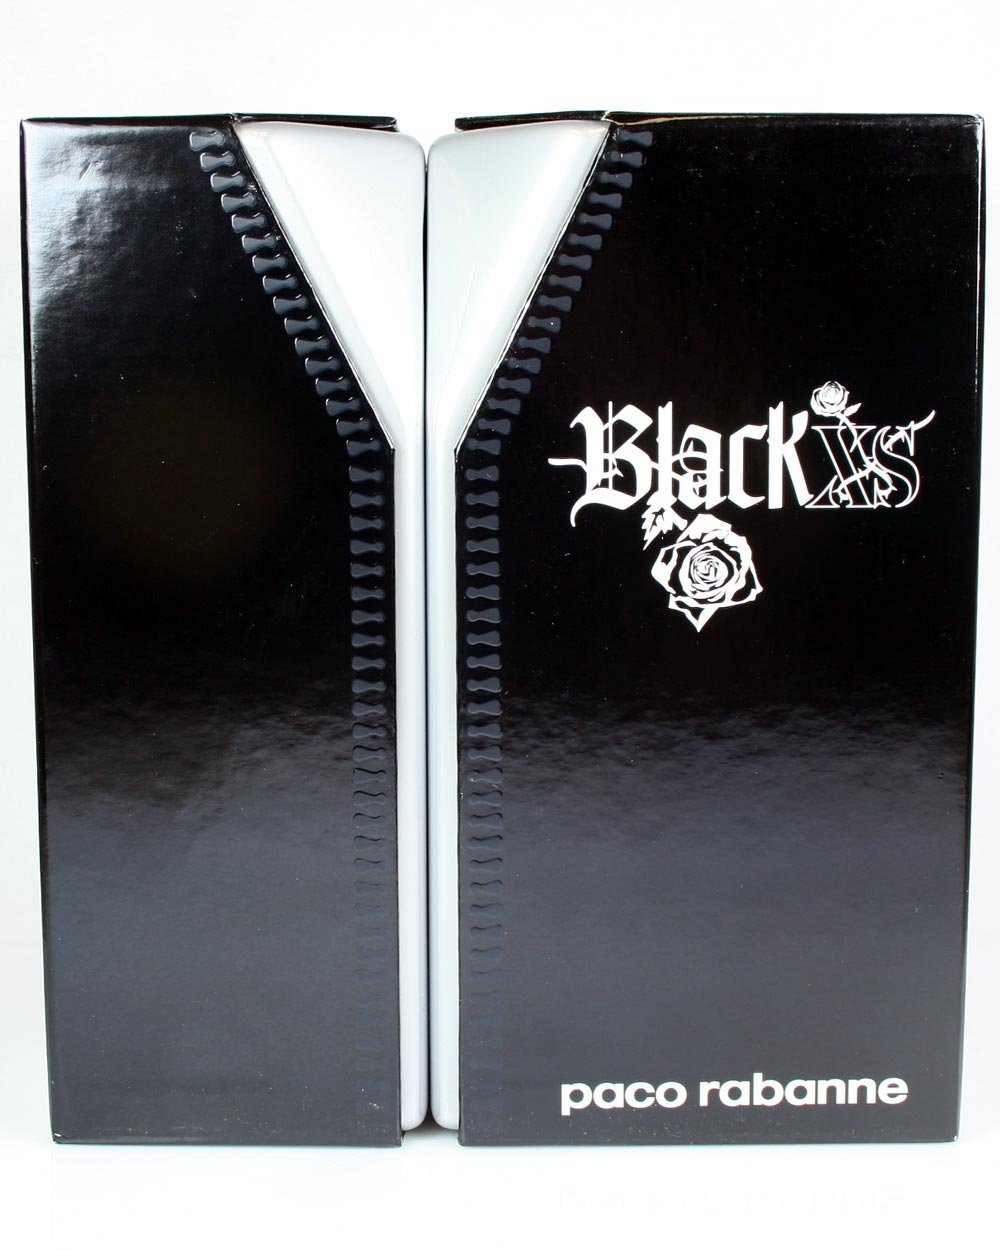 Paco Rabanne Black XS 2pc Gift Set EDT 3.4 oz Men